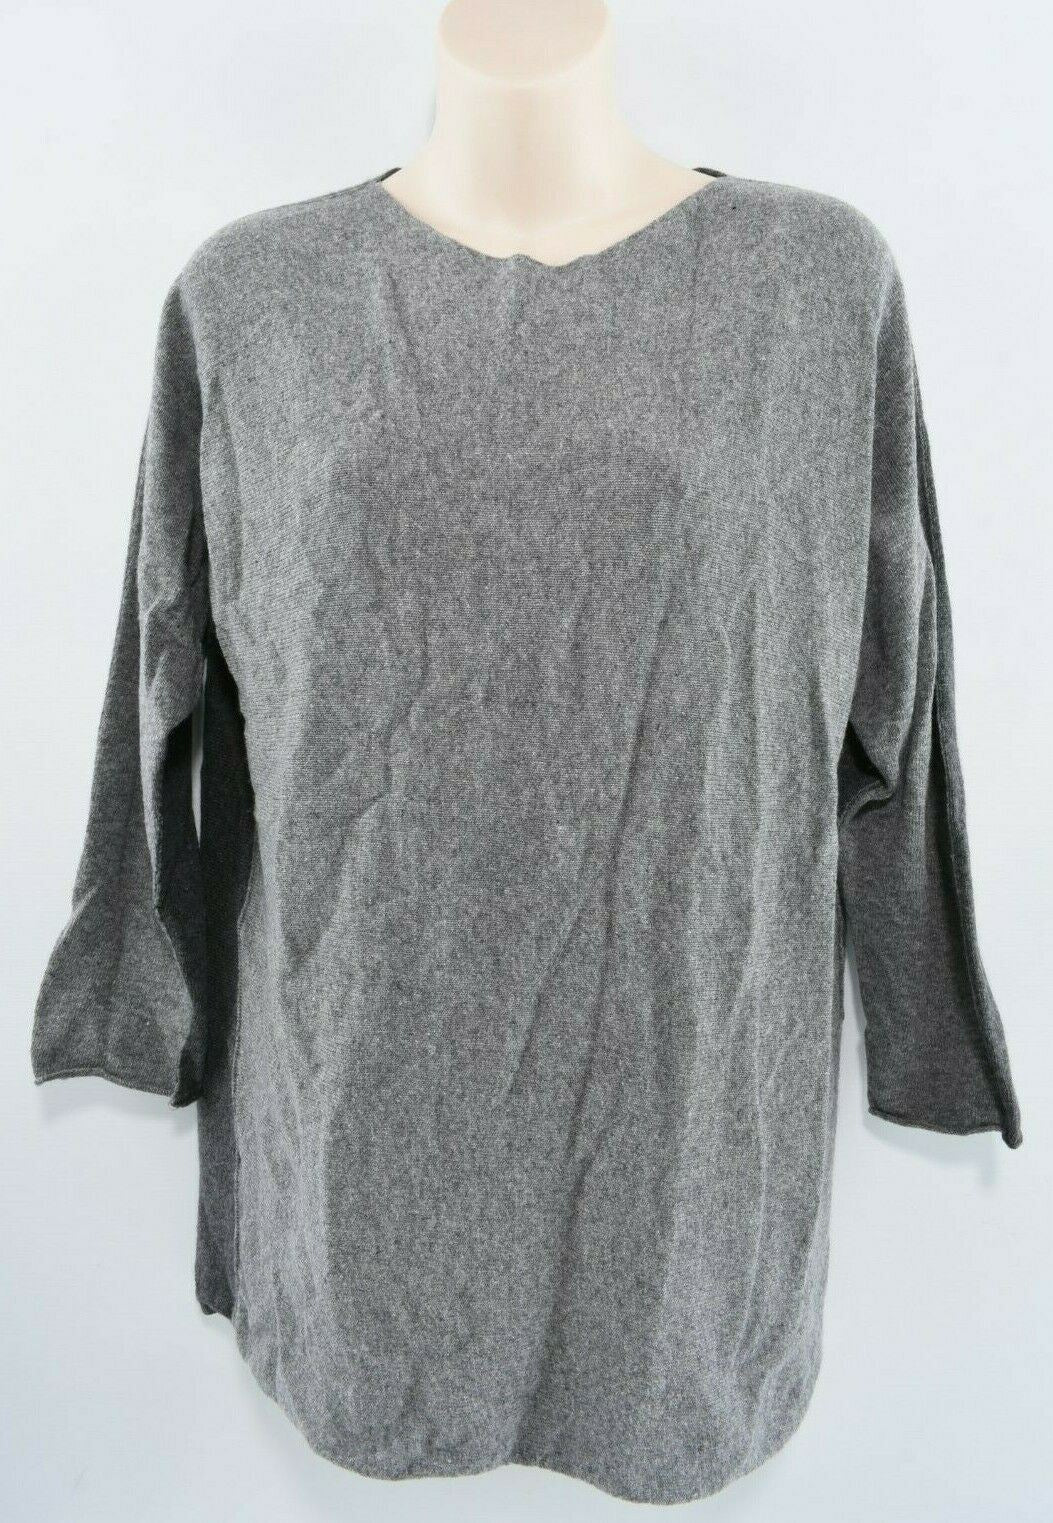 COLLEZIONE GAIA Women's Wool Blend Jumper, Light Grey/Dark Grey size M to size L